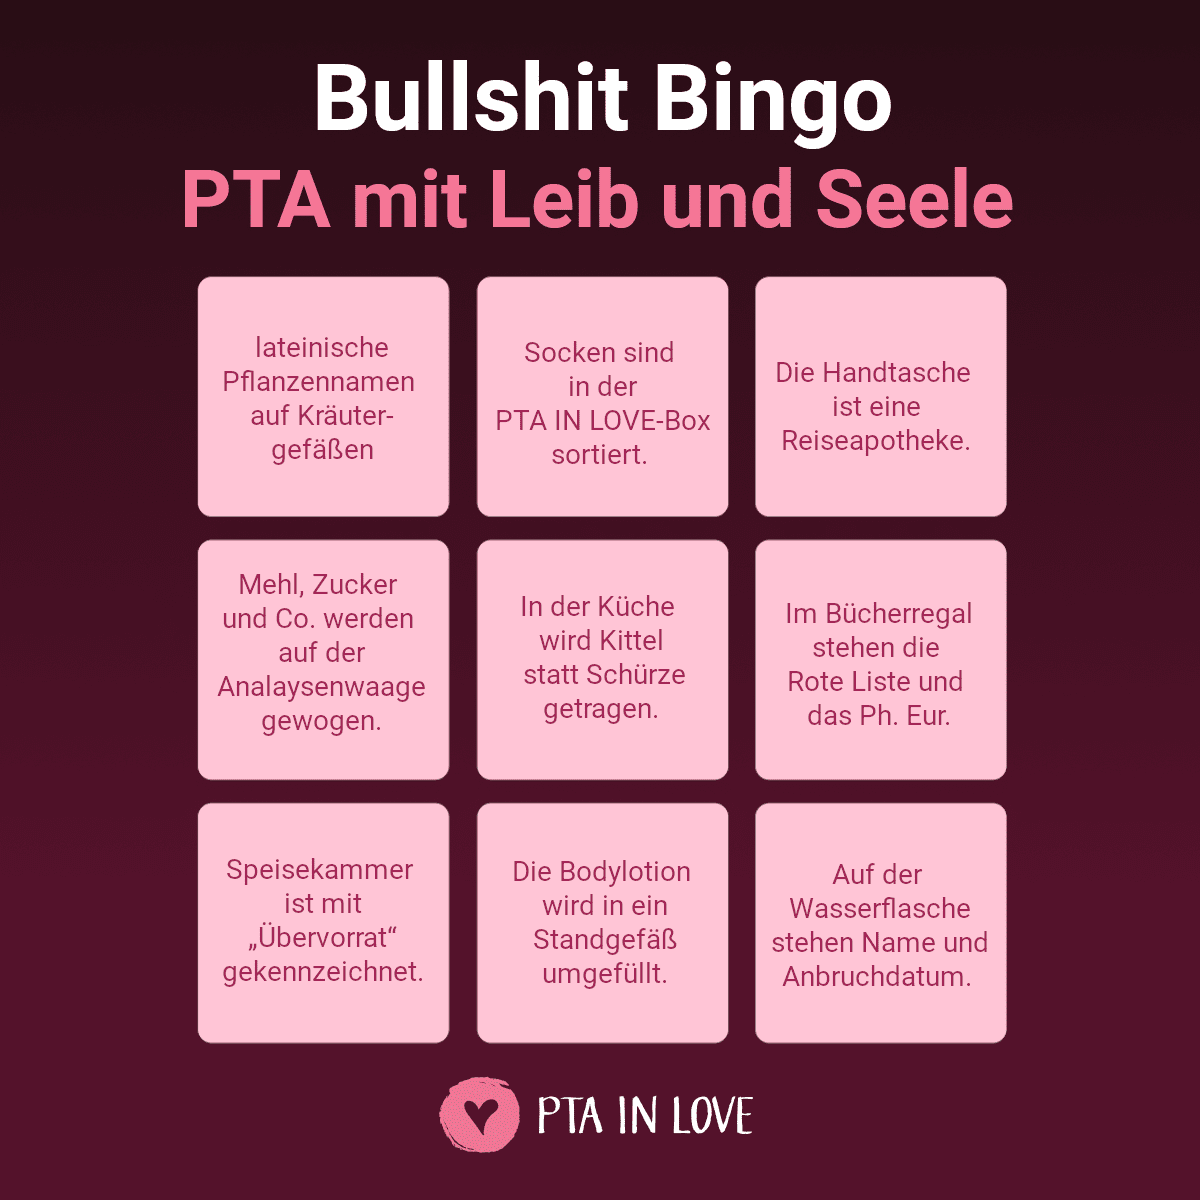 Bullshit-Bingo PTA mit Leib und Seele